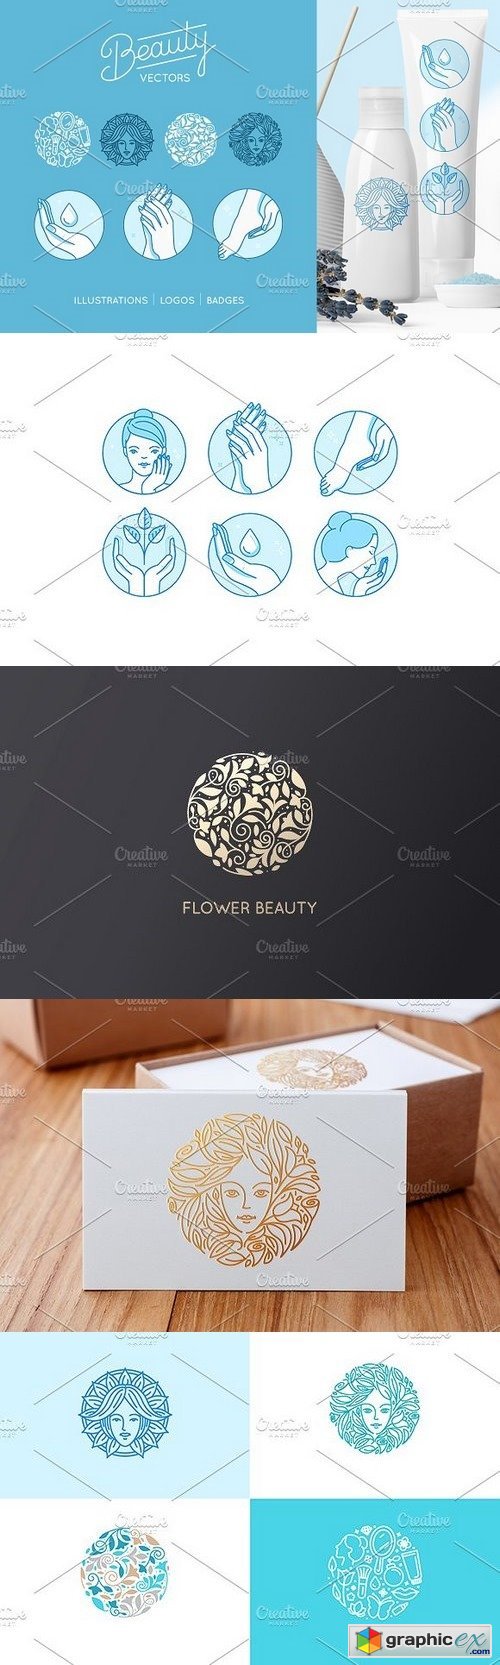 Beauty set - vector logos and badges